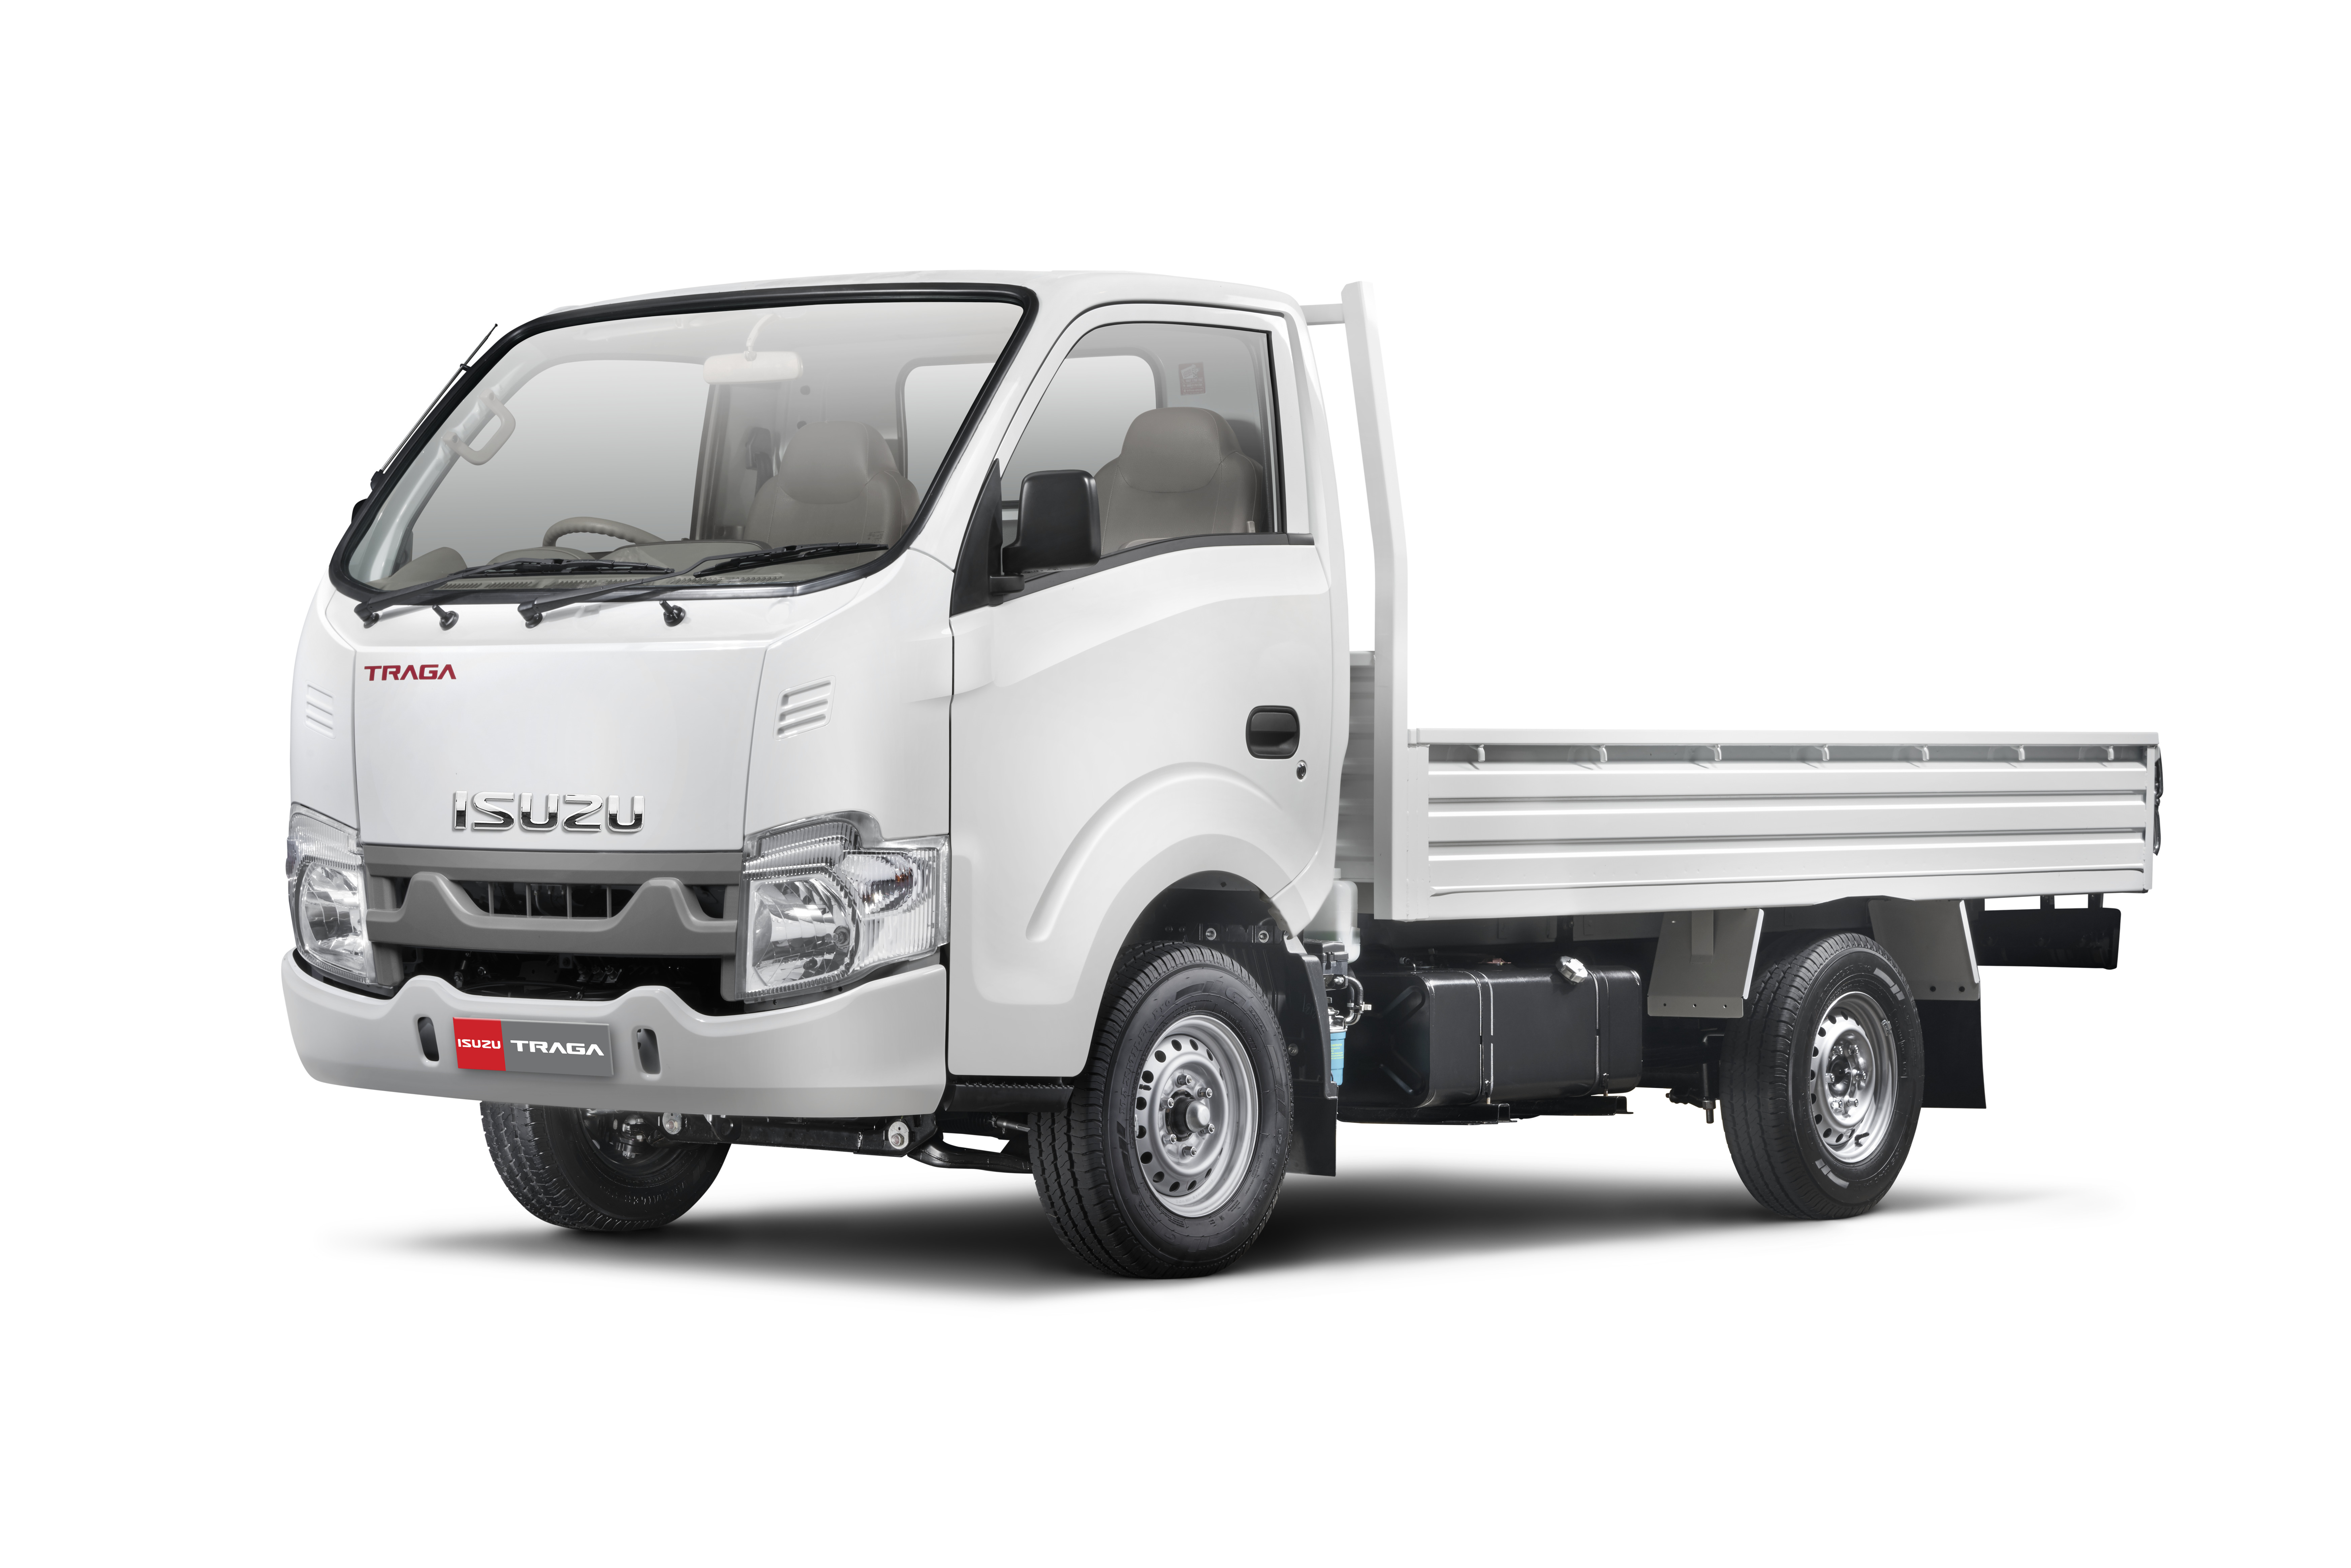 Isuzu Traga Light-Duty Truck in Indonesia Japan Daily